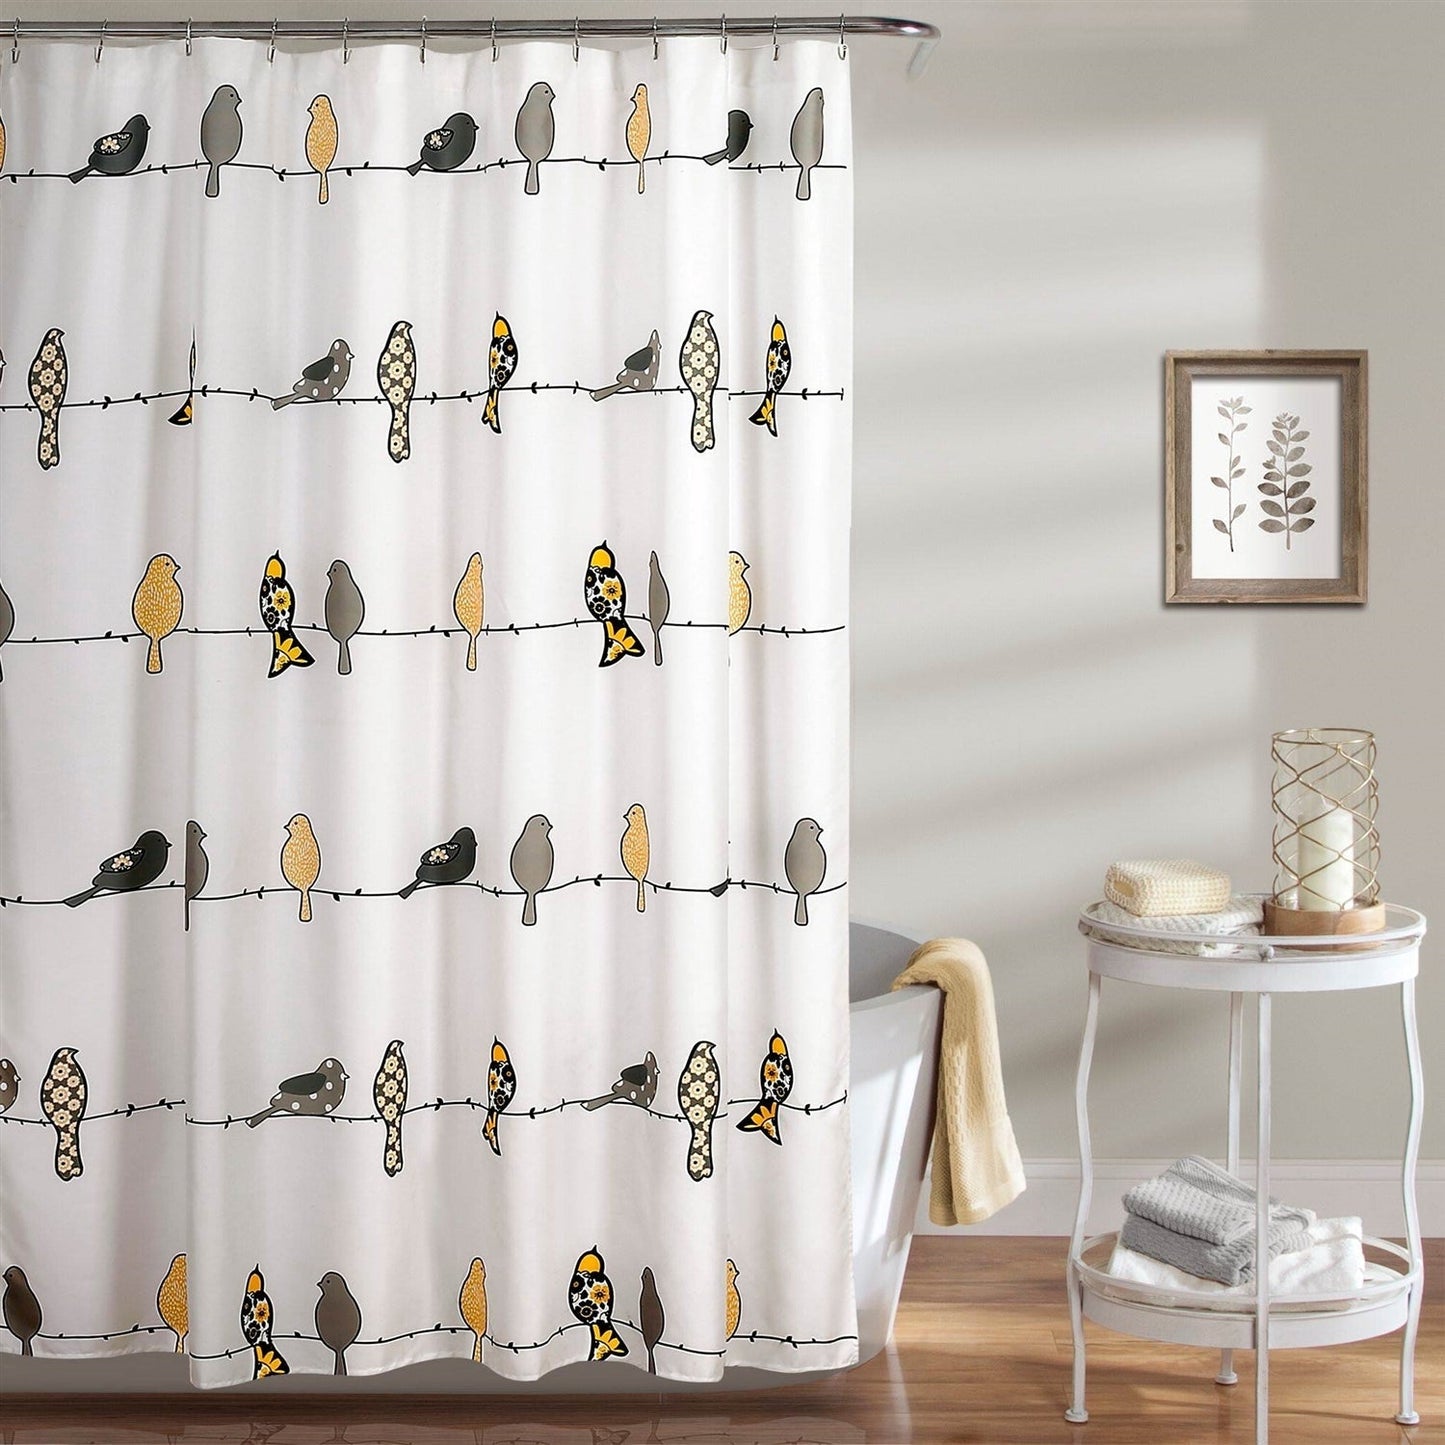 Bathroom > Shower Curtains - 72 X 72 Inch Yellow Grey Birds Floral Polyester Machine-Washable Shower Curtain